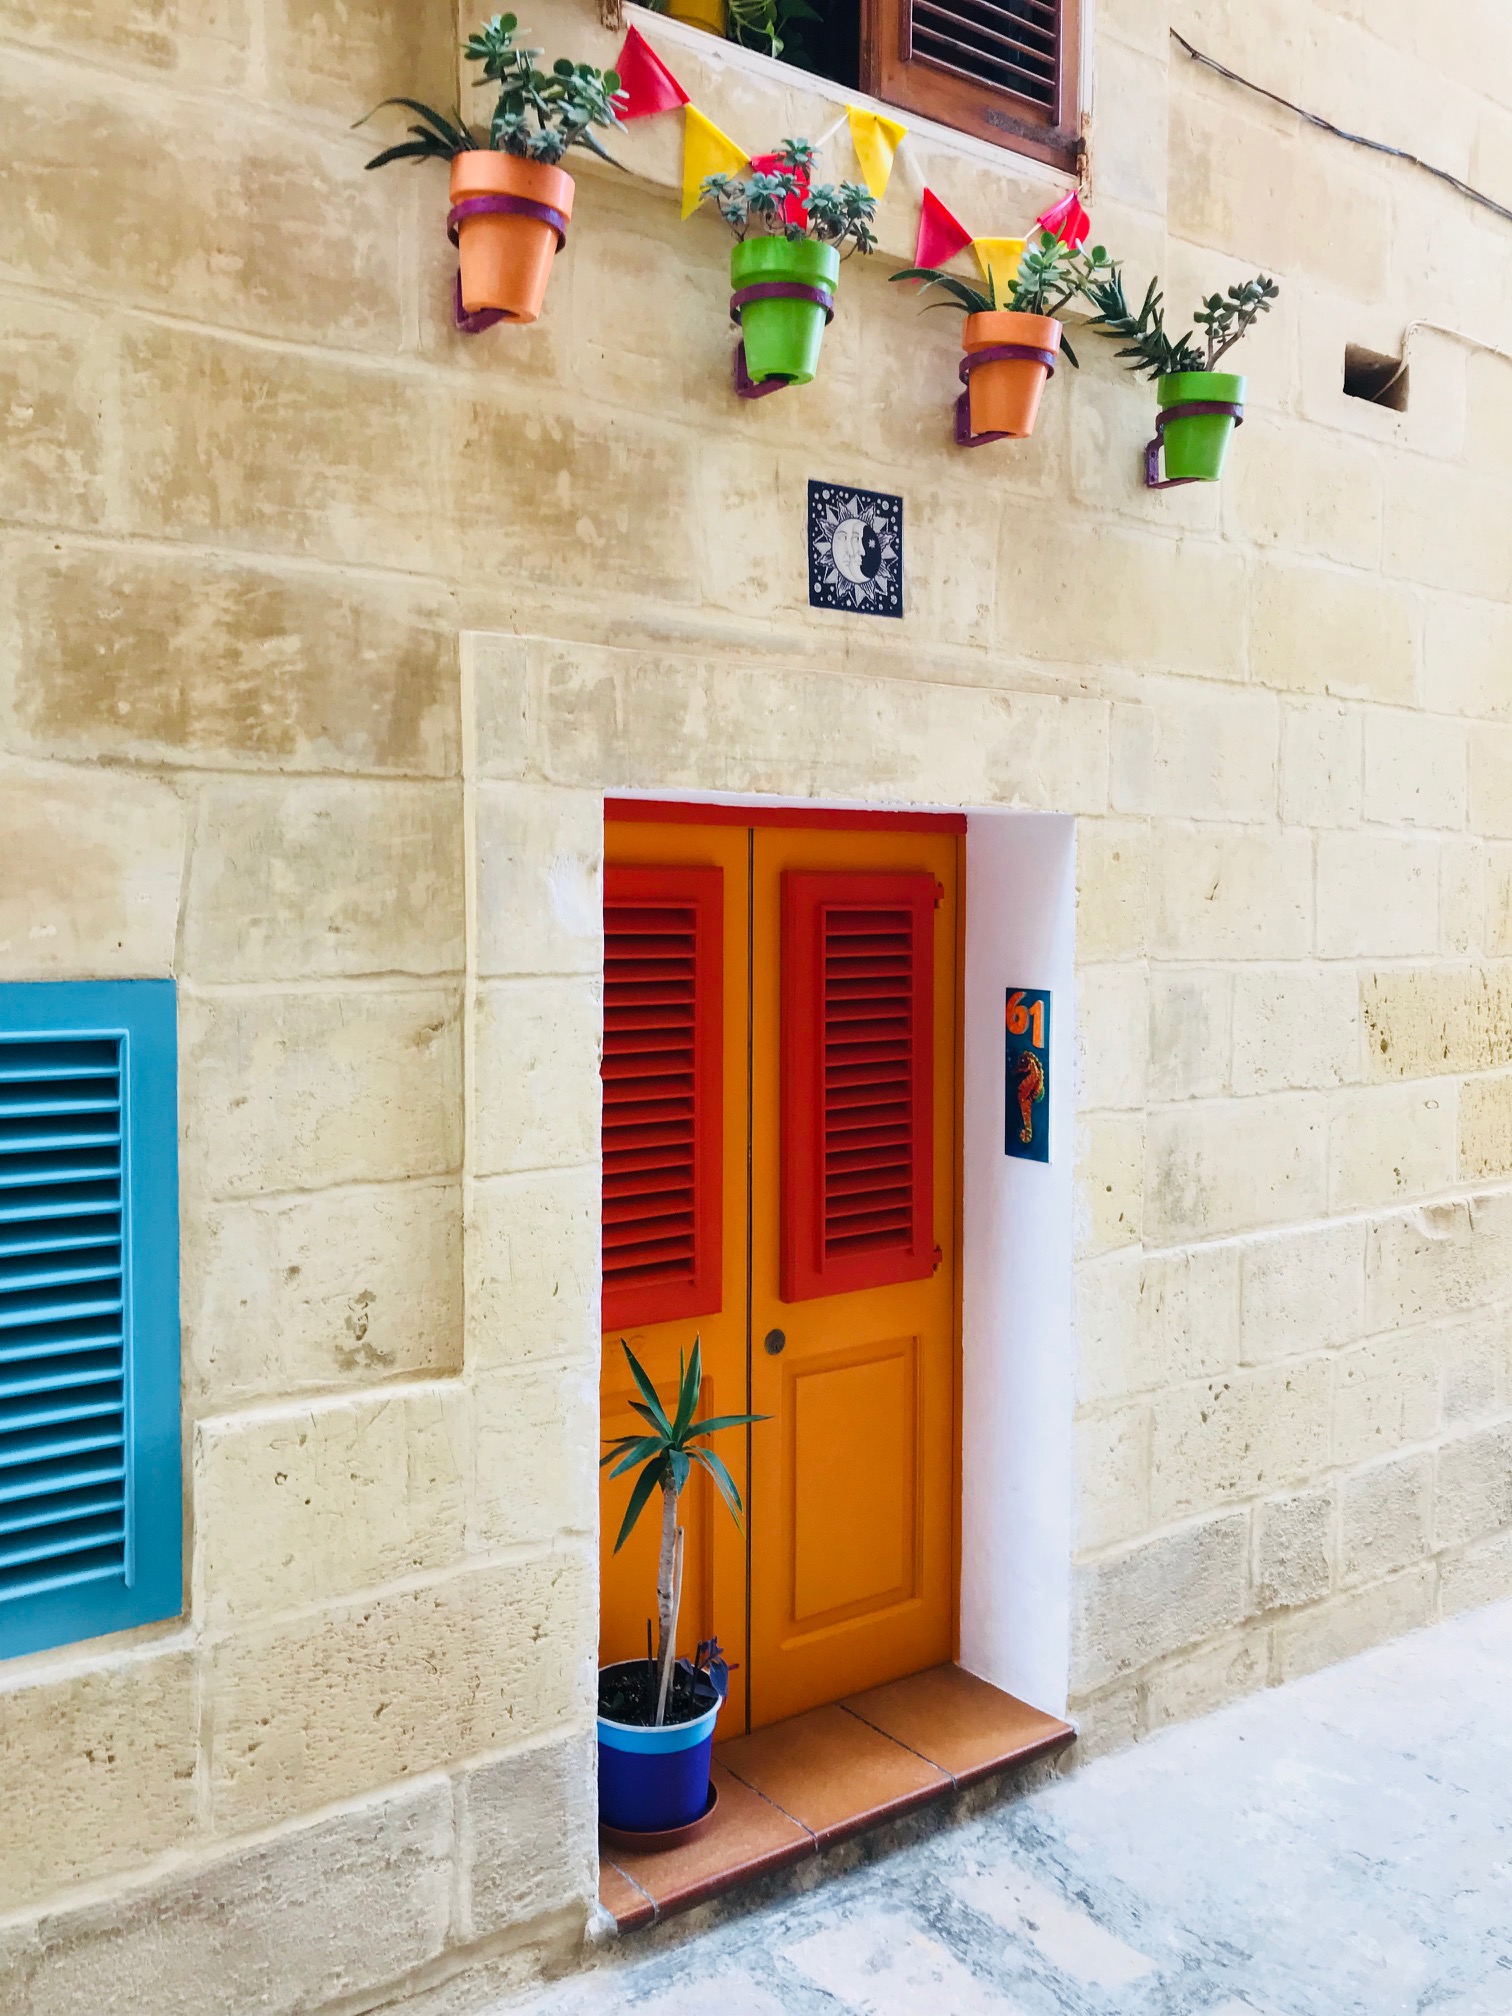 The streets of Senglea, Malta